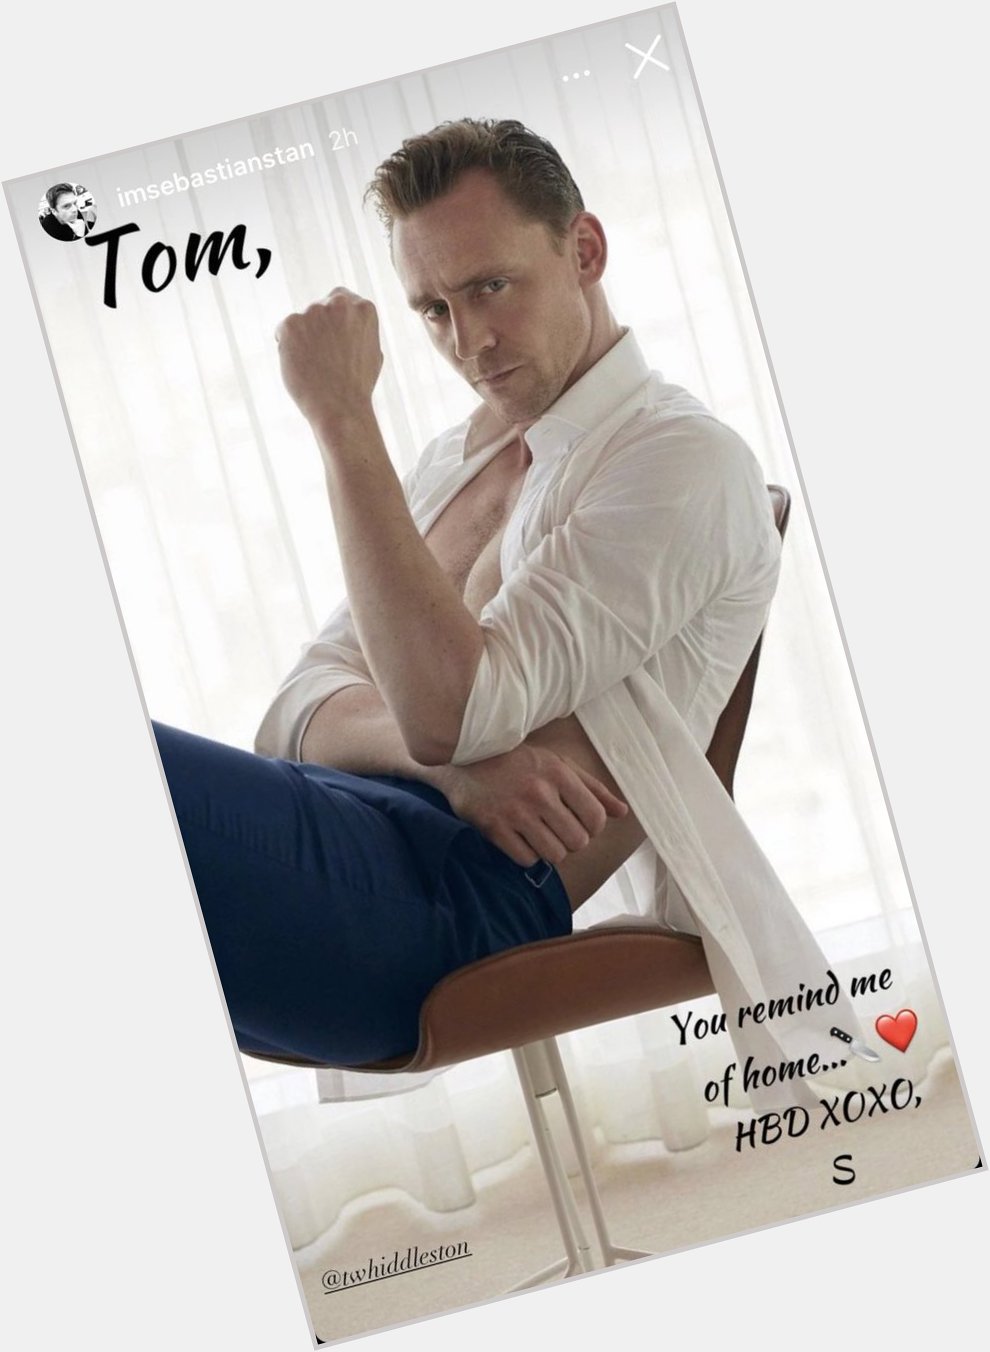 Sebastian wishing Tom Hiddleston a Happy Birthday in his IG story.  